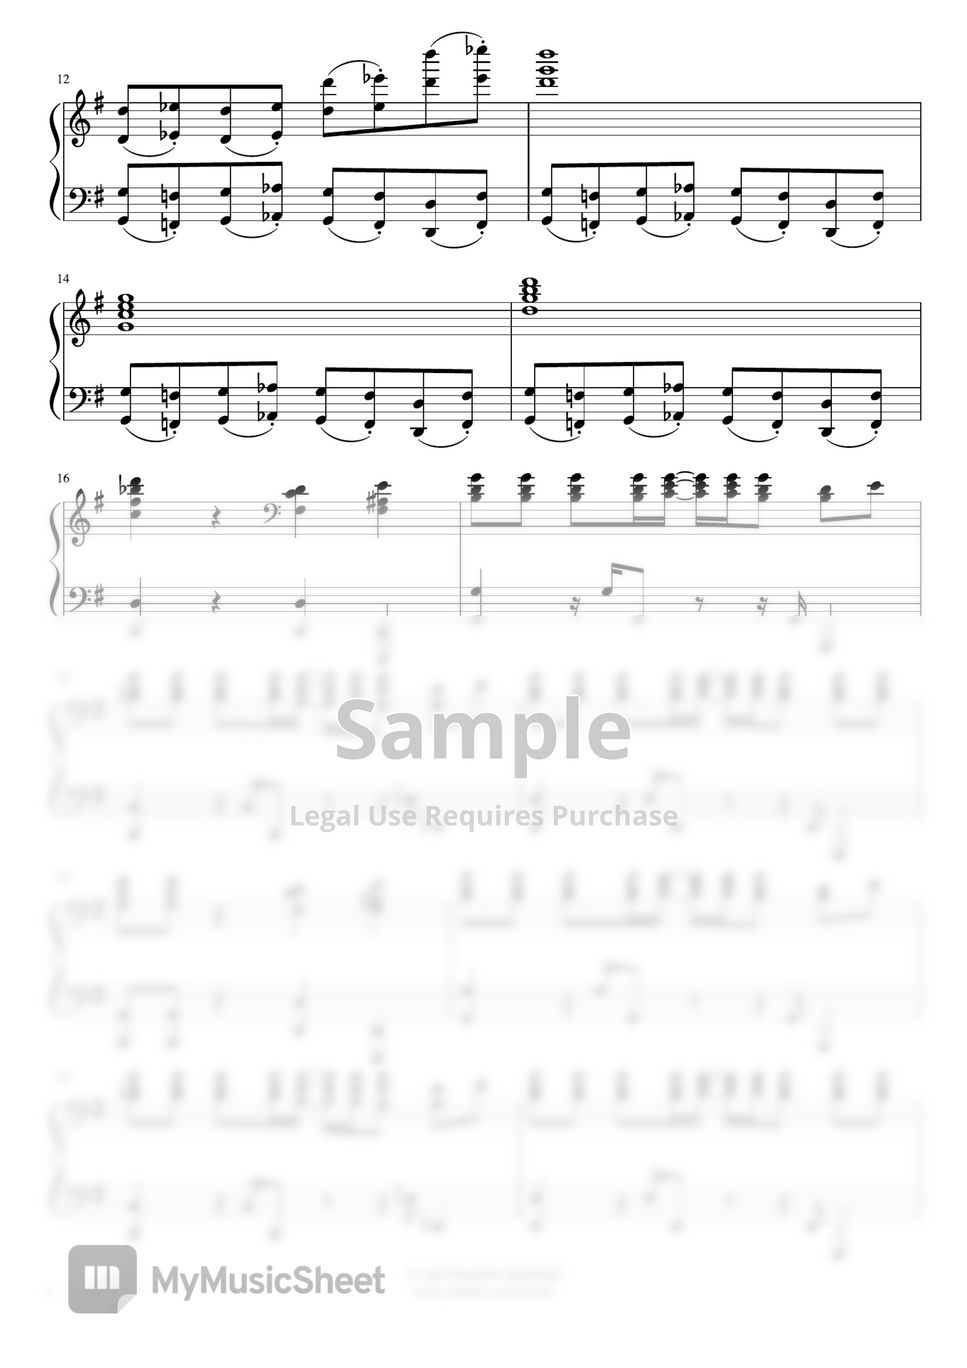 Children's song - Baby Shark (Piano solo ver.) by PIANIST EINSTEIN